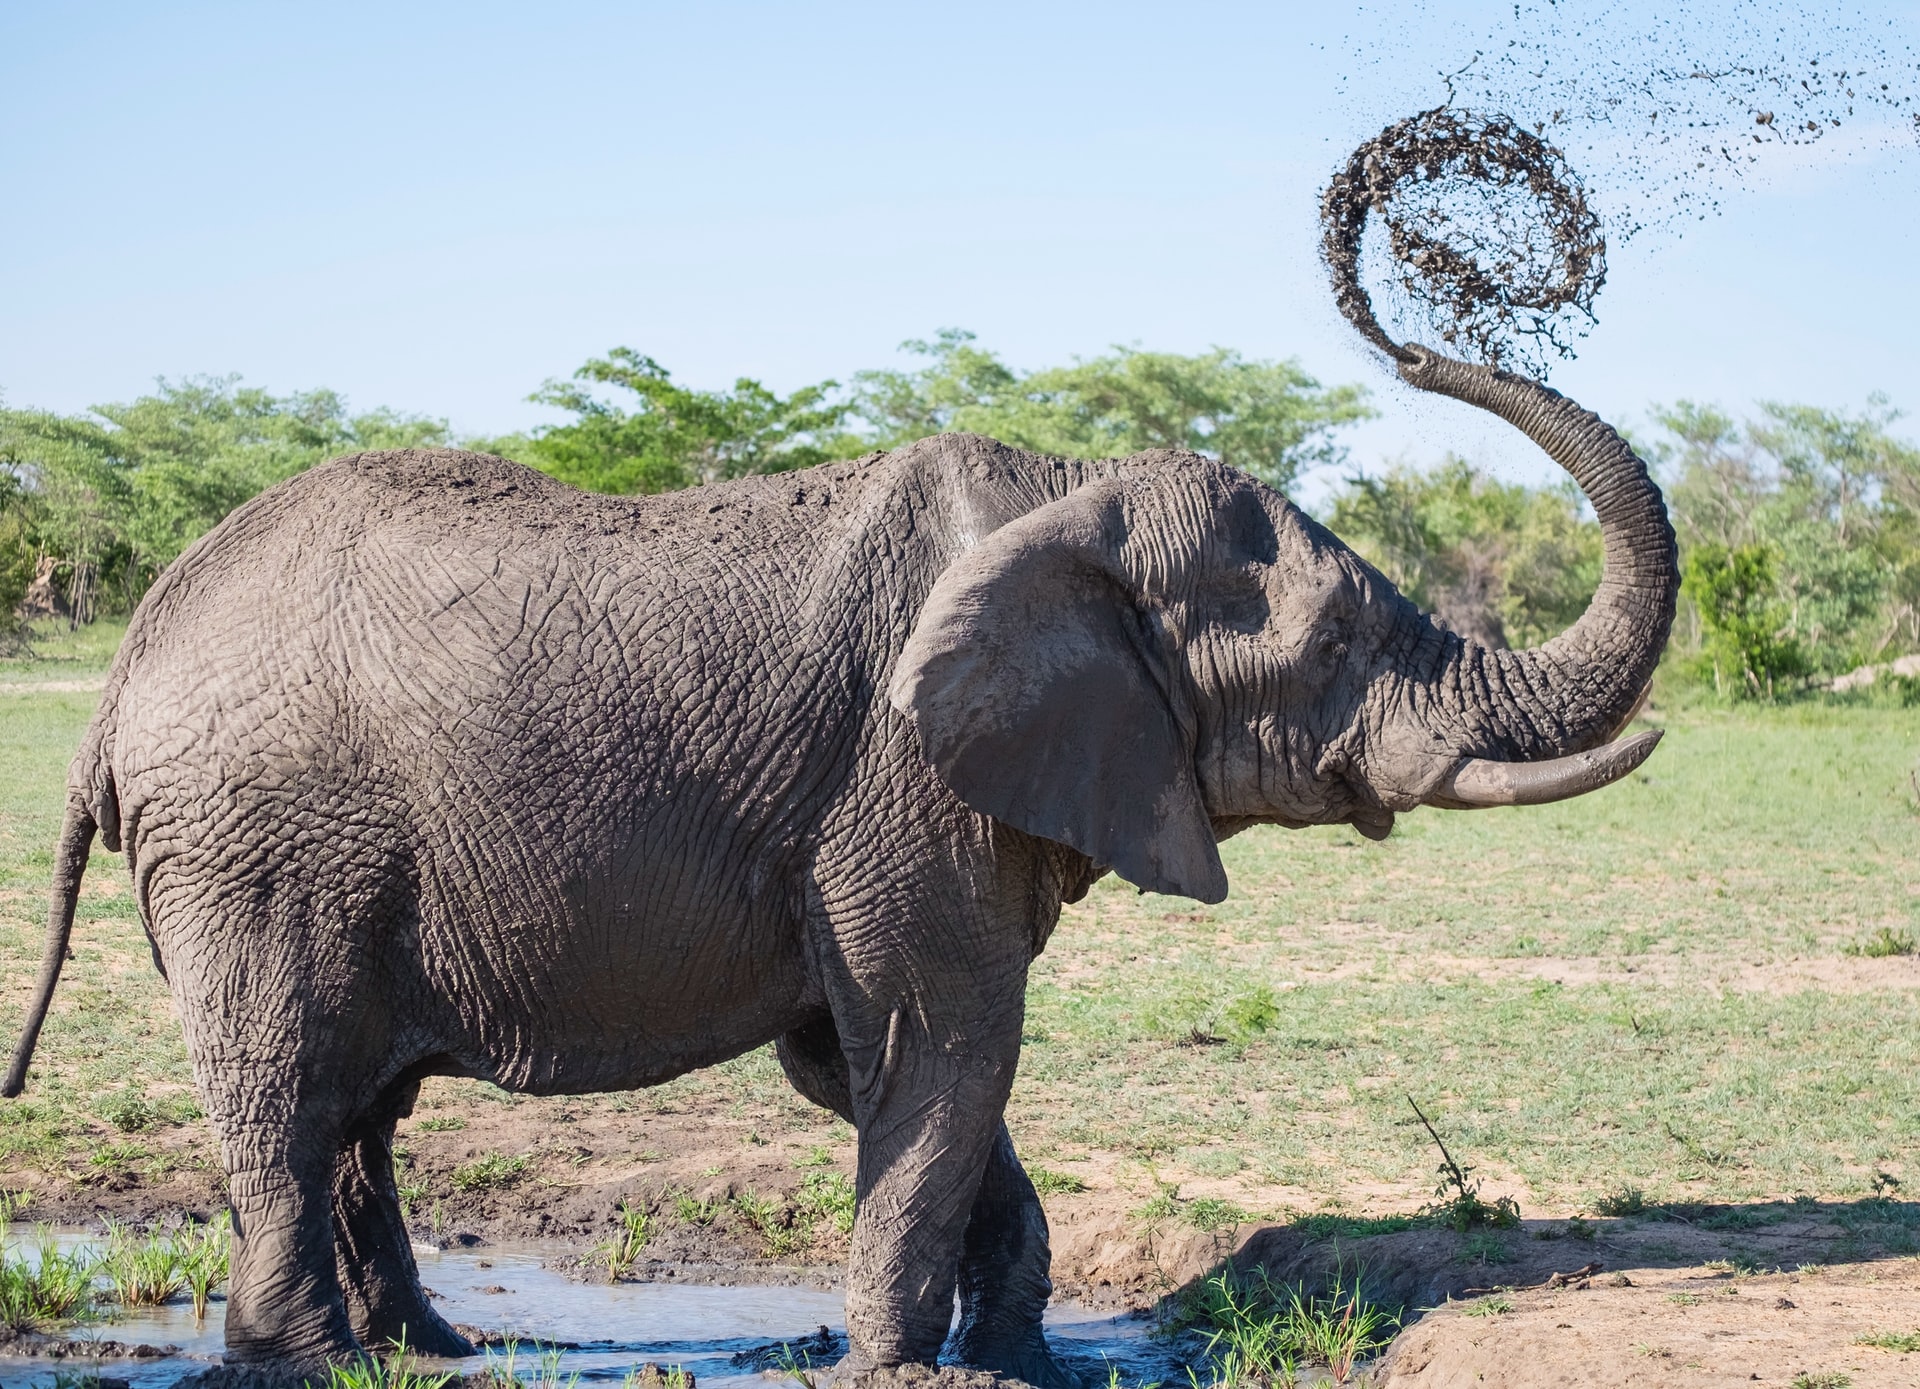 An elephant sprays itself with mud